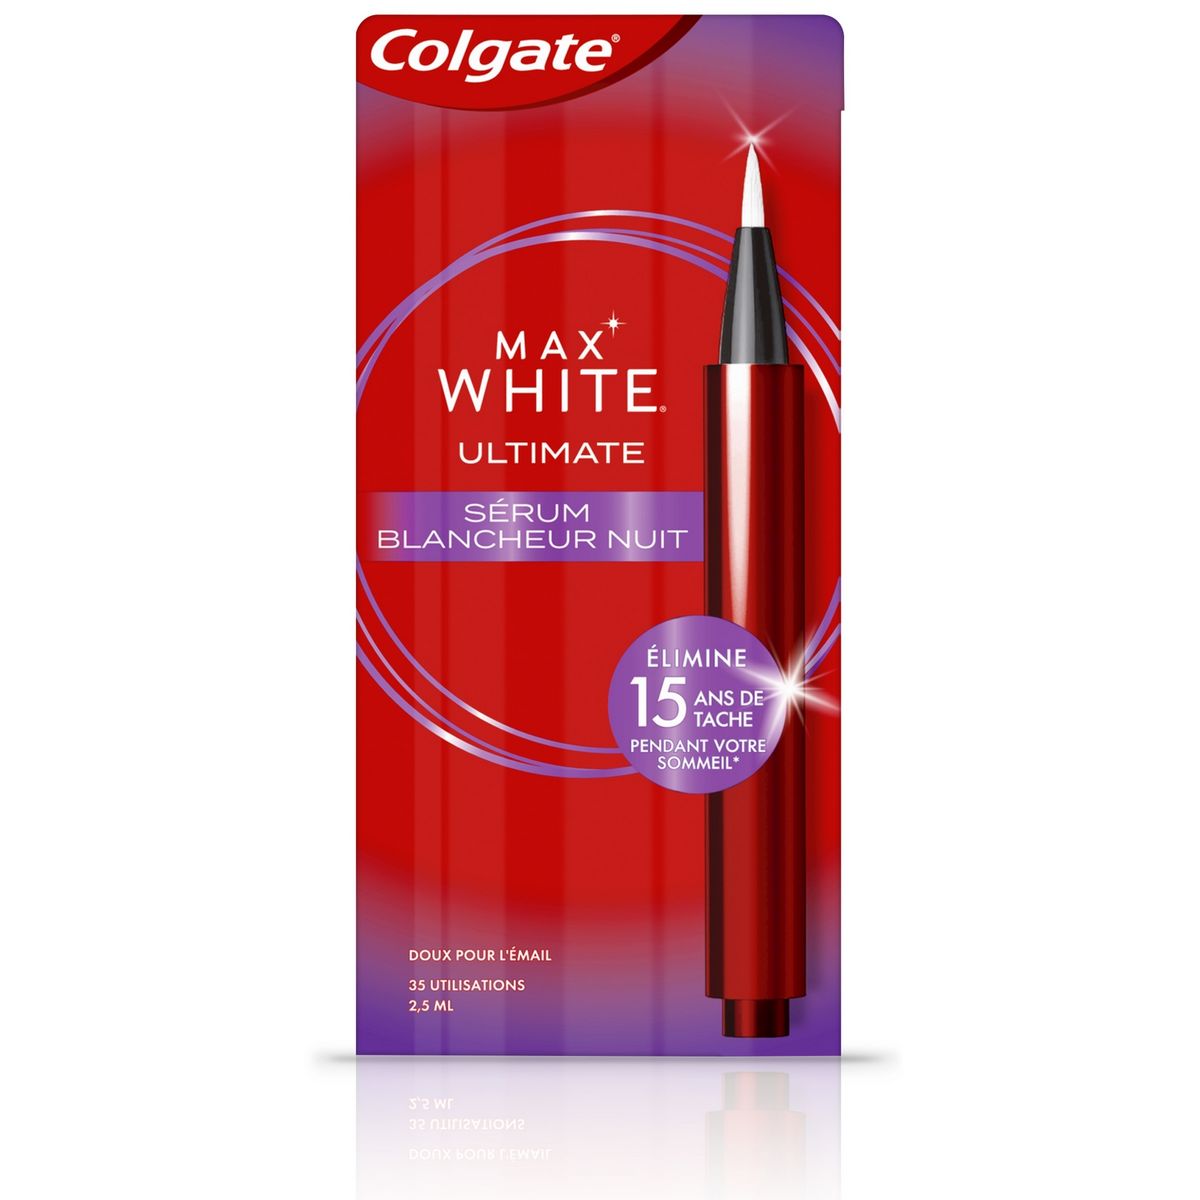 COLGATE Max White Ultimate Sérum blancheur nuit 35 utilisations 2.5ml